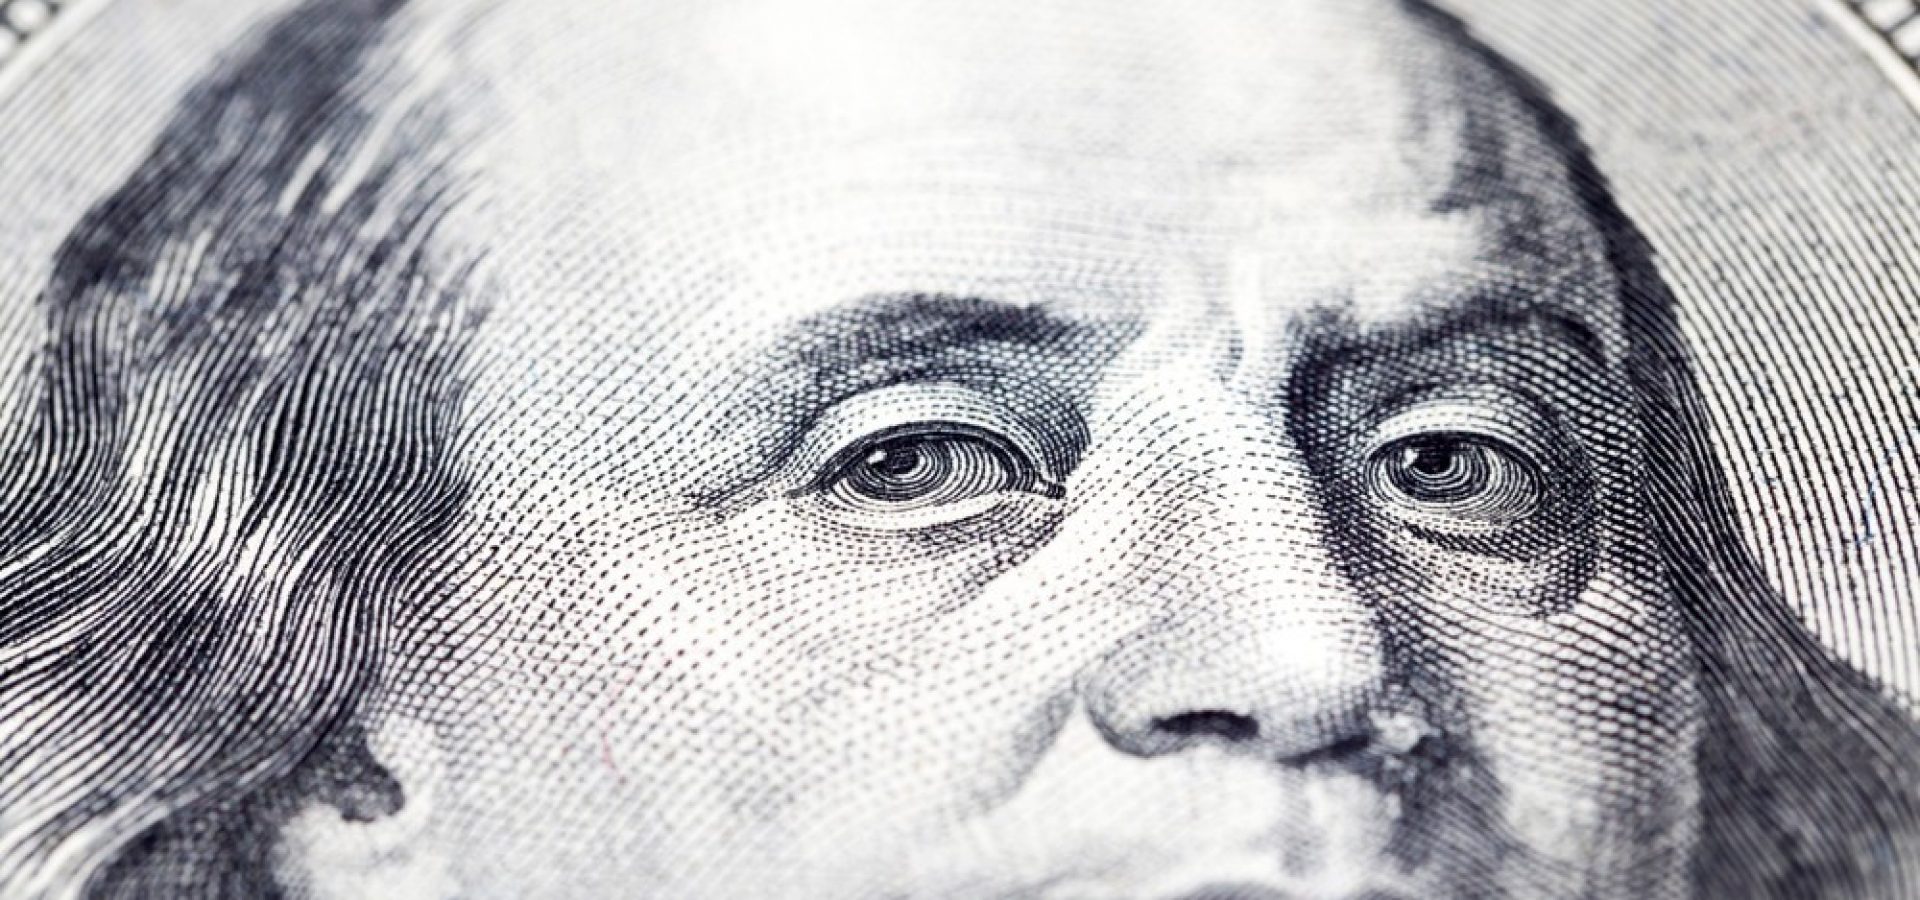 Wibest – Dollar: A close up of a US dollar bill.